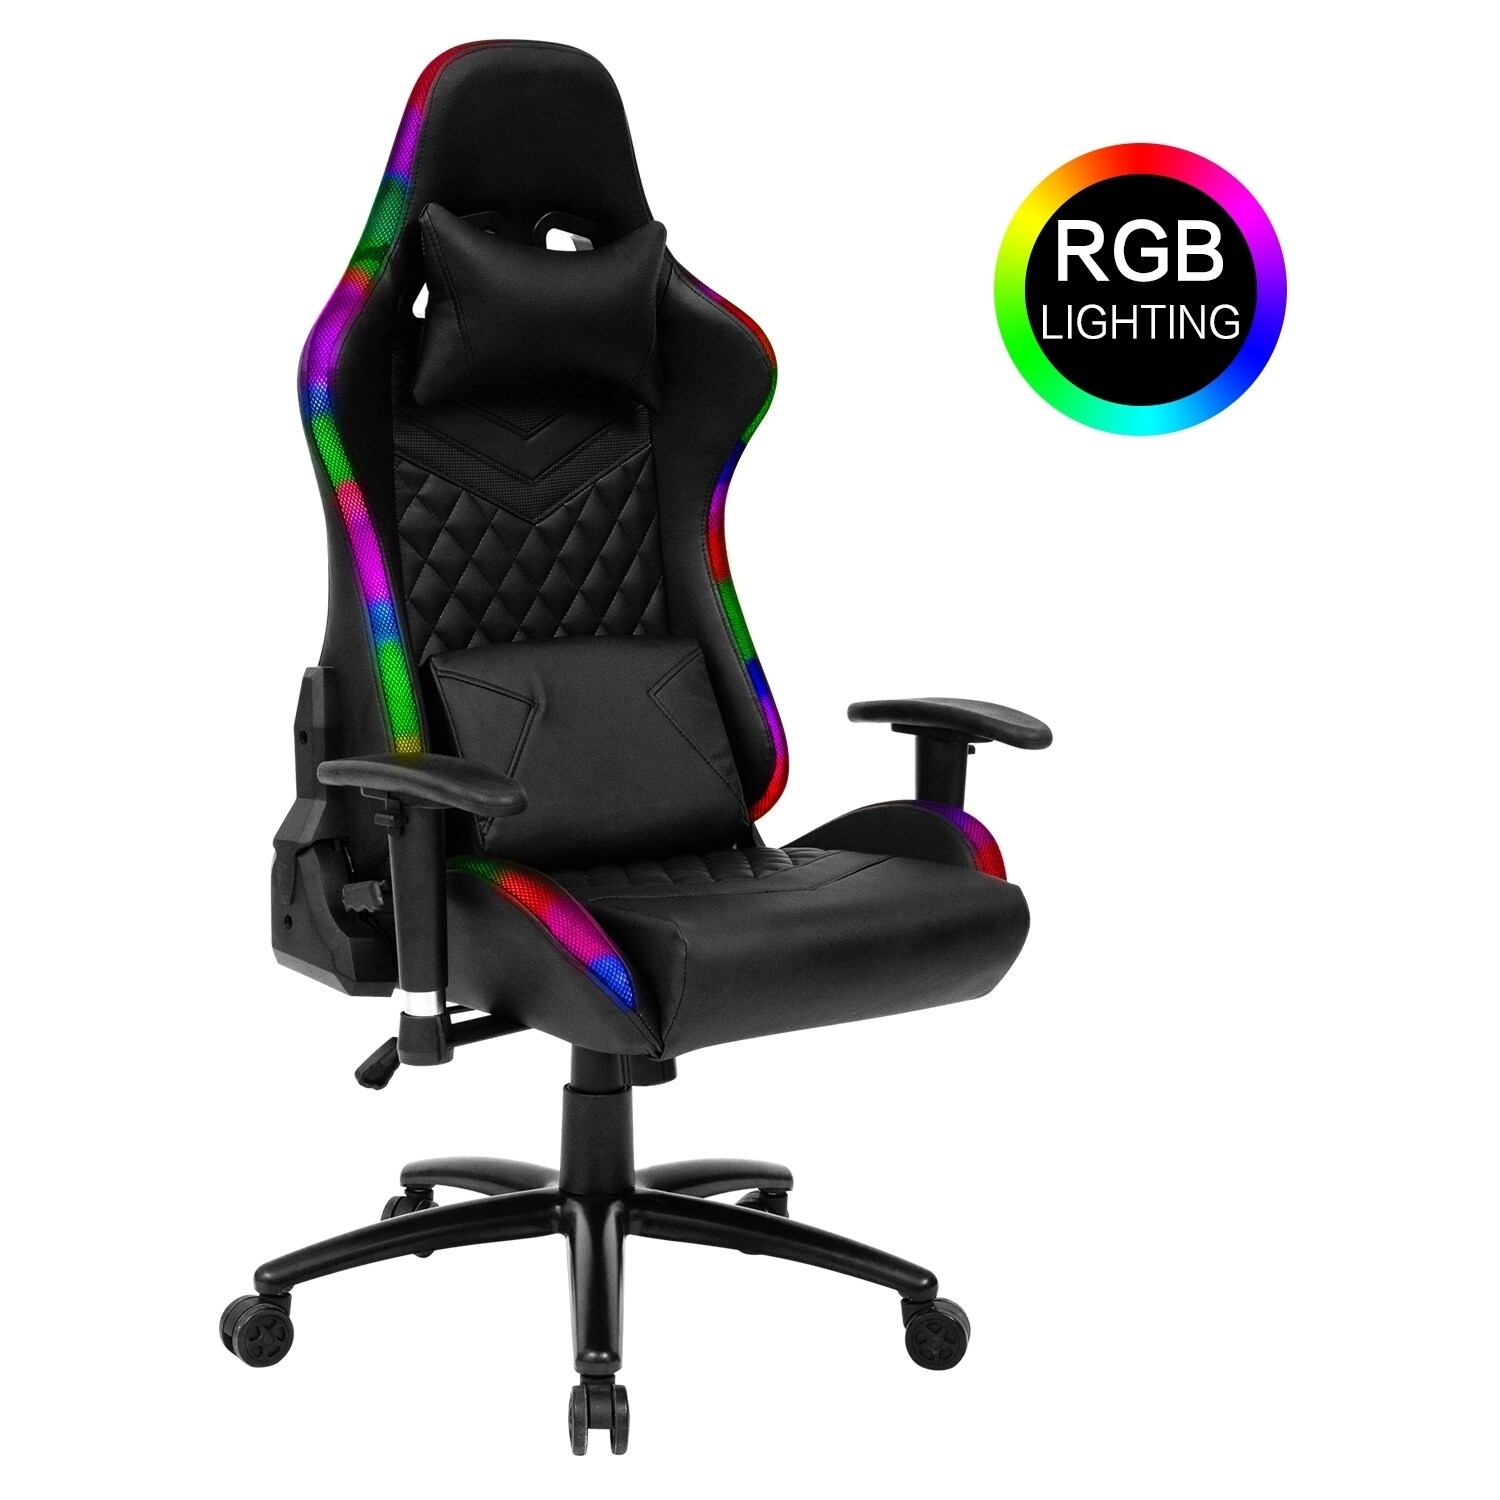 Ergonomic PC & Racing Game Chair